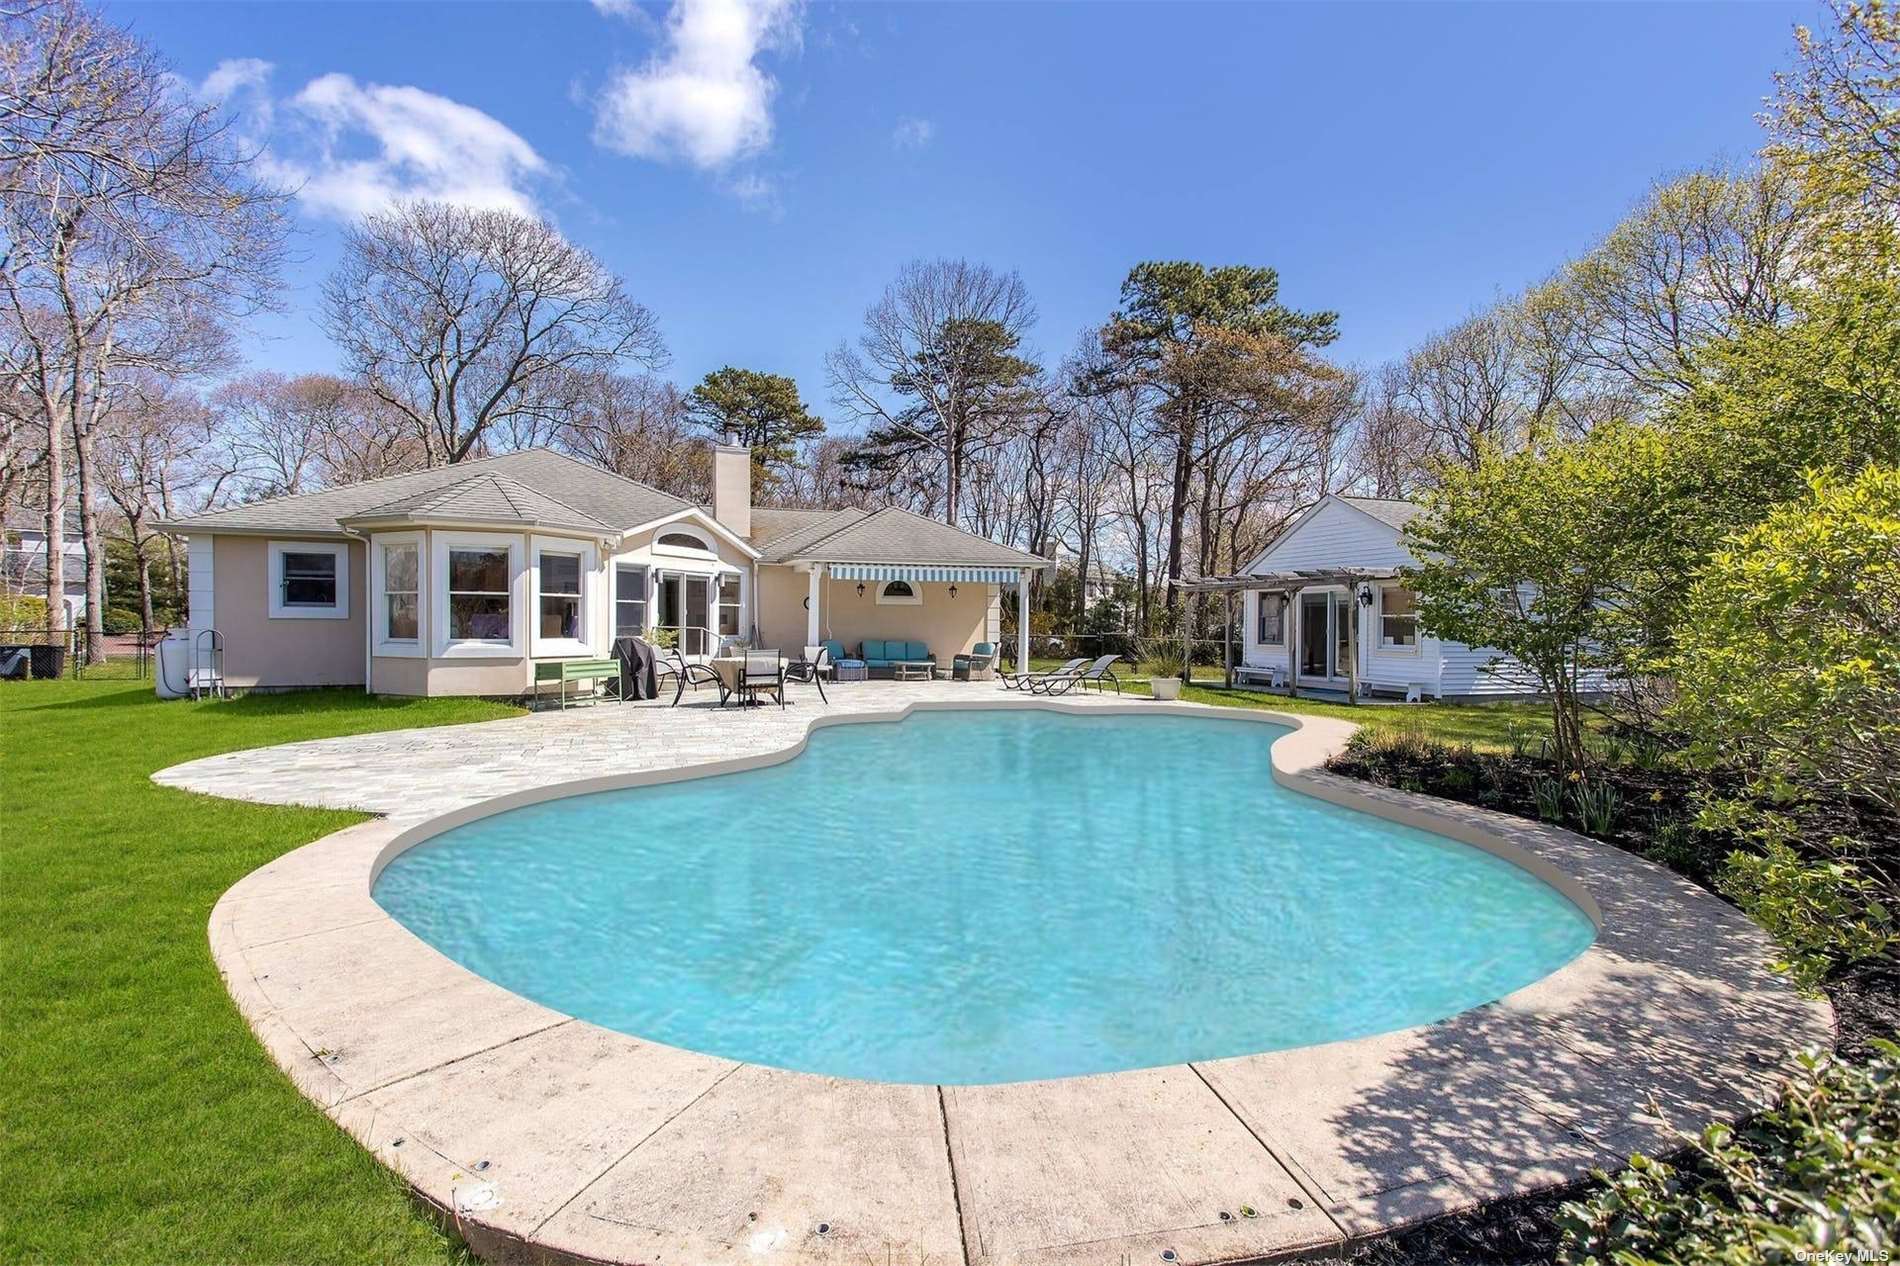 Rental Property at 8 Country Lane, Hampton Bays, Hamptons, NY - Bedrooms: 3 
Bathrooms: 4  - $70,000 MO.